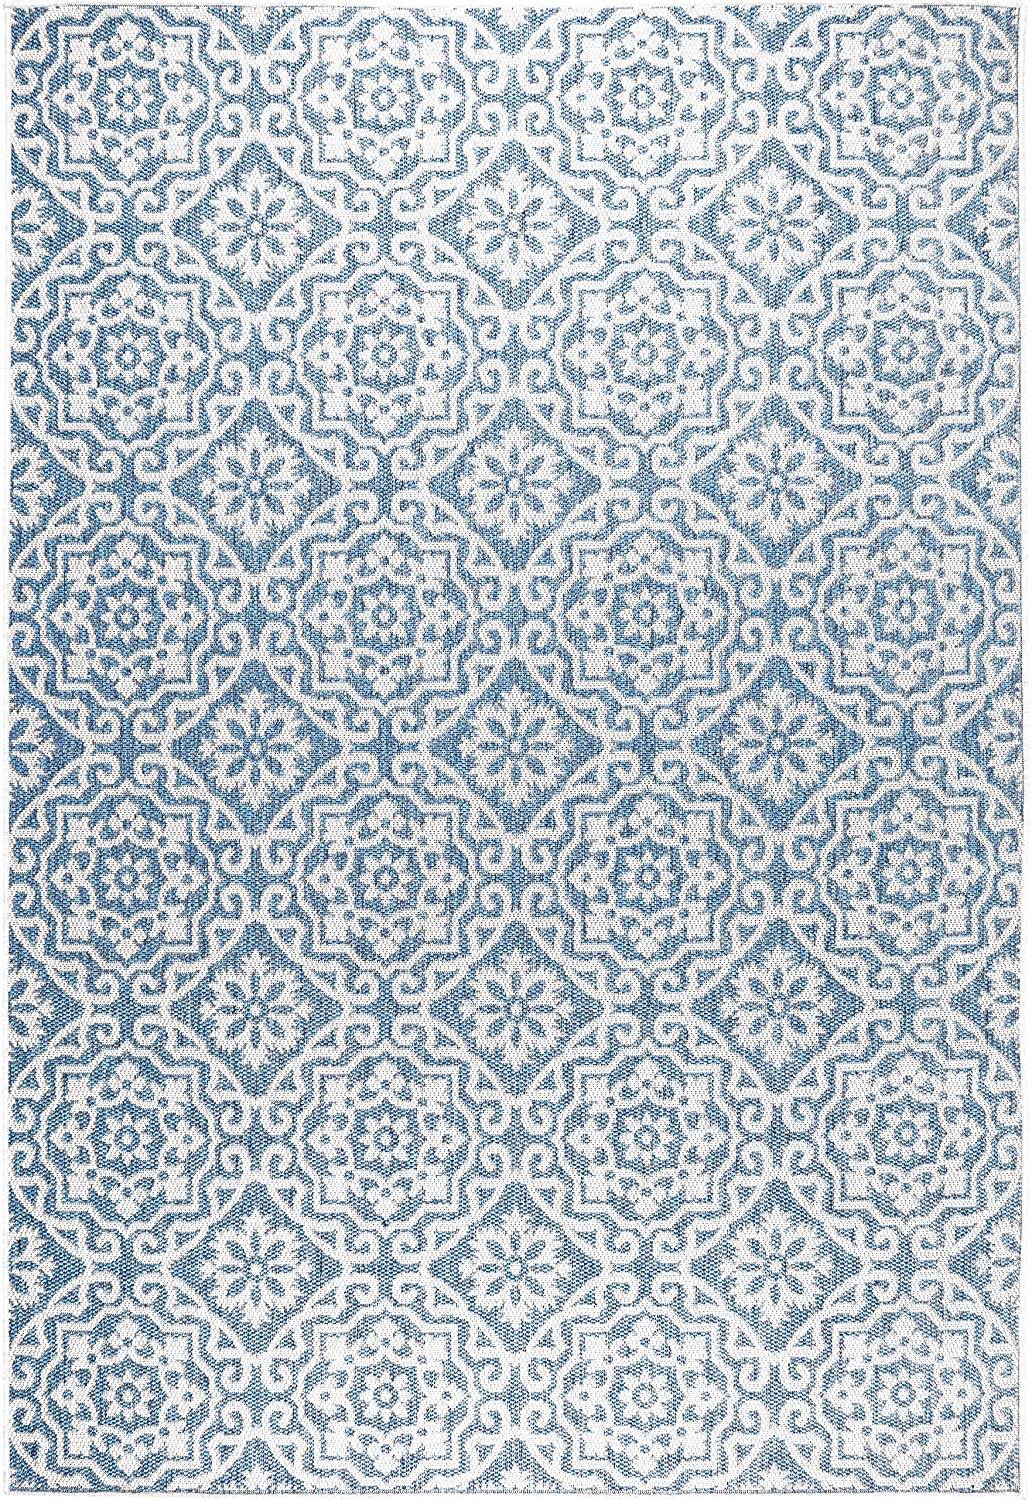 Damask Pattern Blue Grey Indoor/Outdoor Area Rug - UV/Weather Resistant